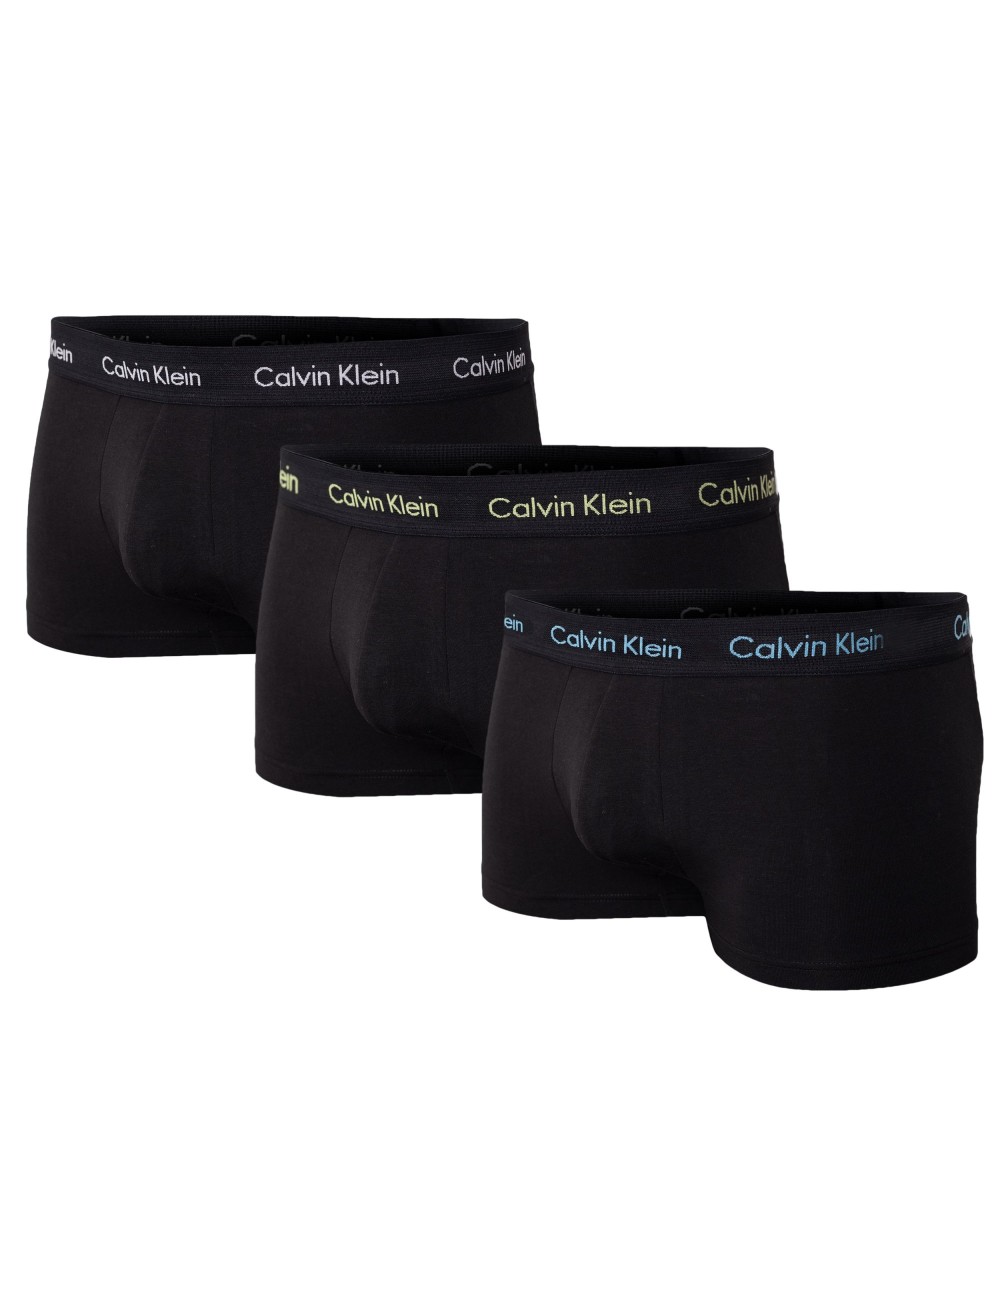 CALVIN KLEIN PACK OF 3 BLACK BOXERS